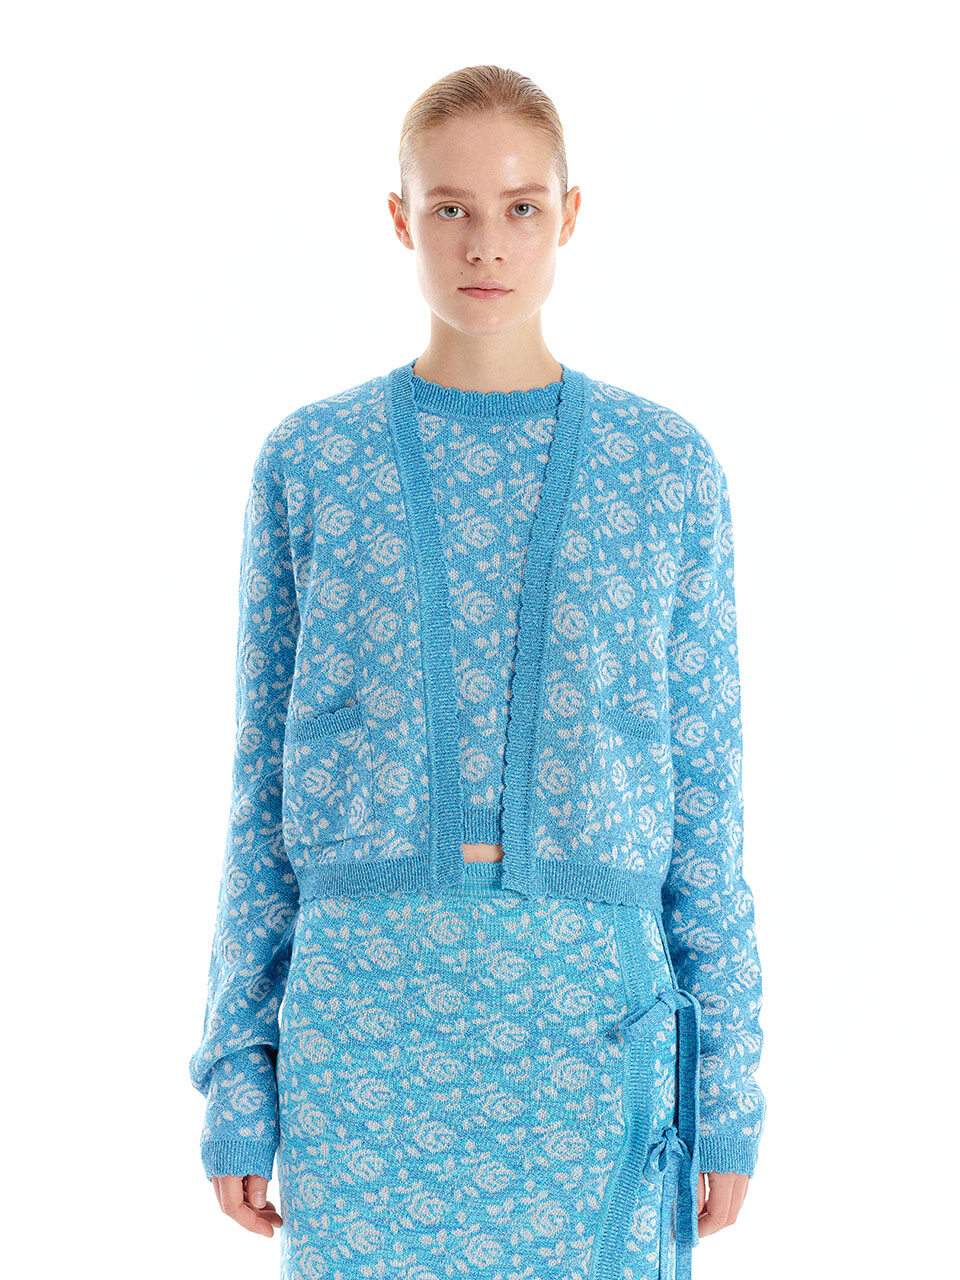 EENK ULORAL Floral Jacquard Knit Cardigan (Sky Blue)